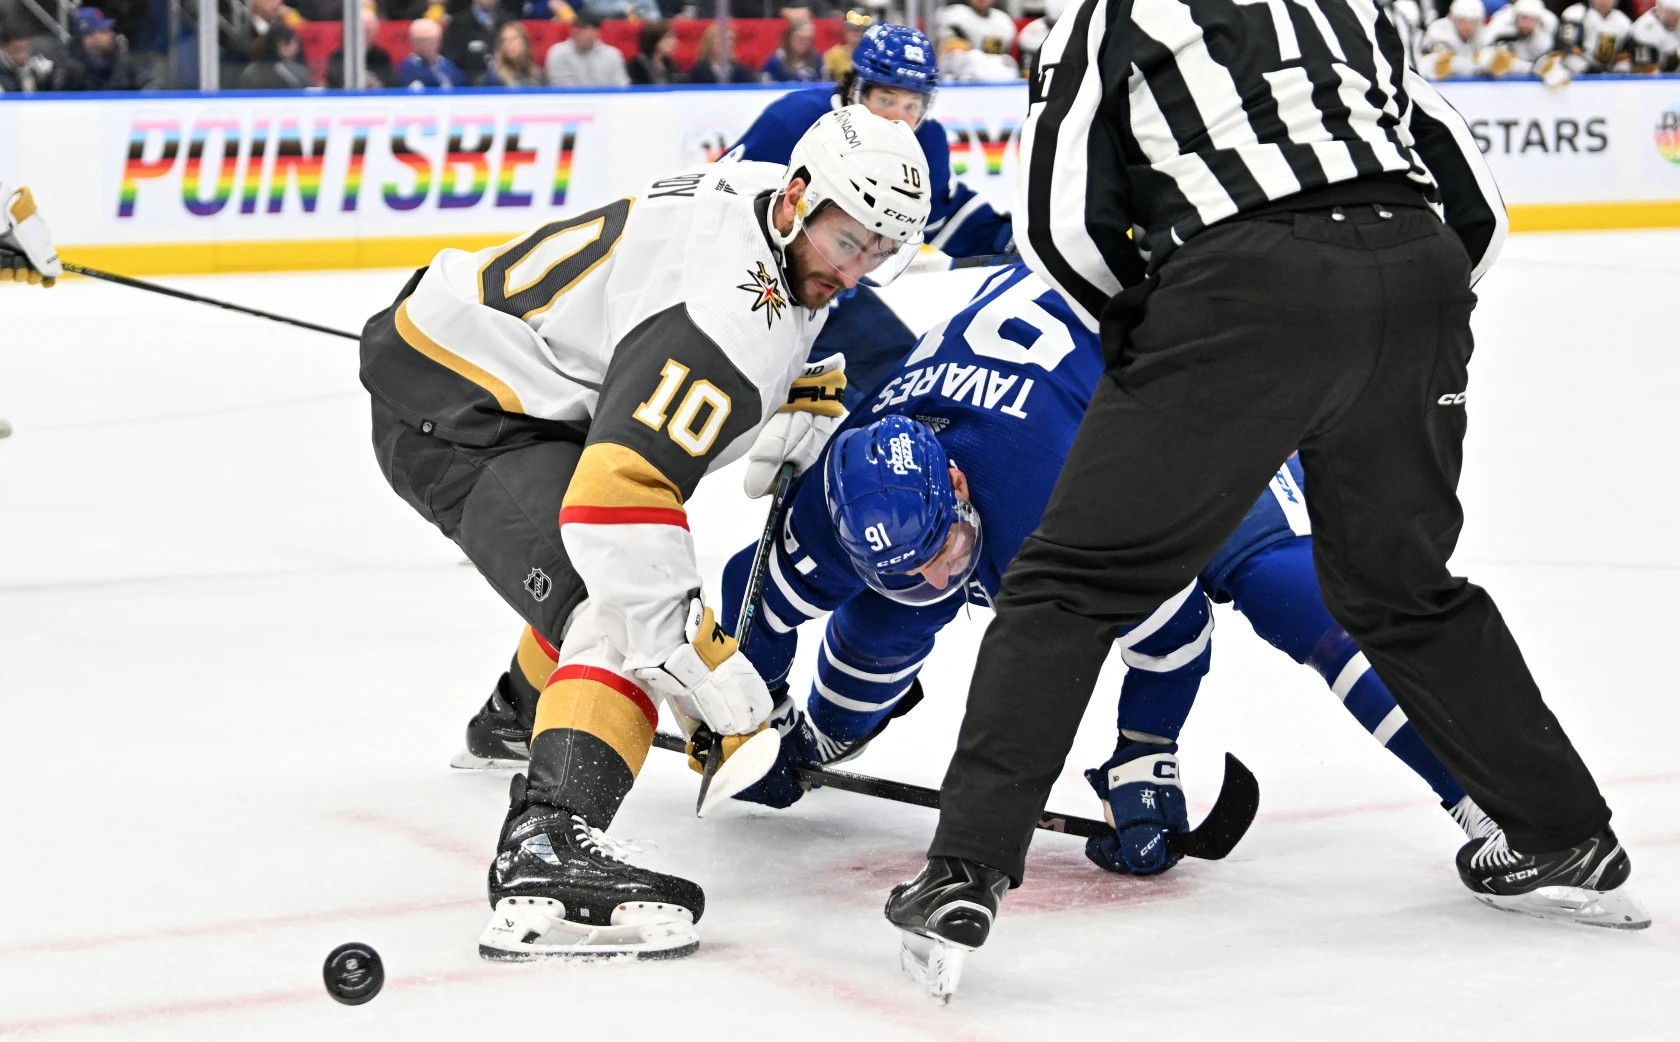 John Tavares, Maple Leafs vs. Golden Knighst